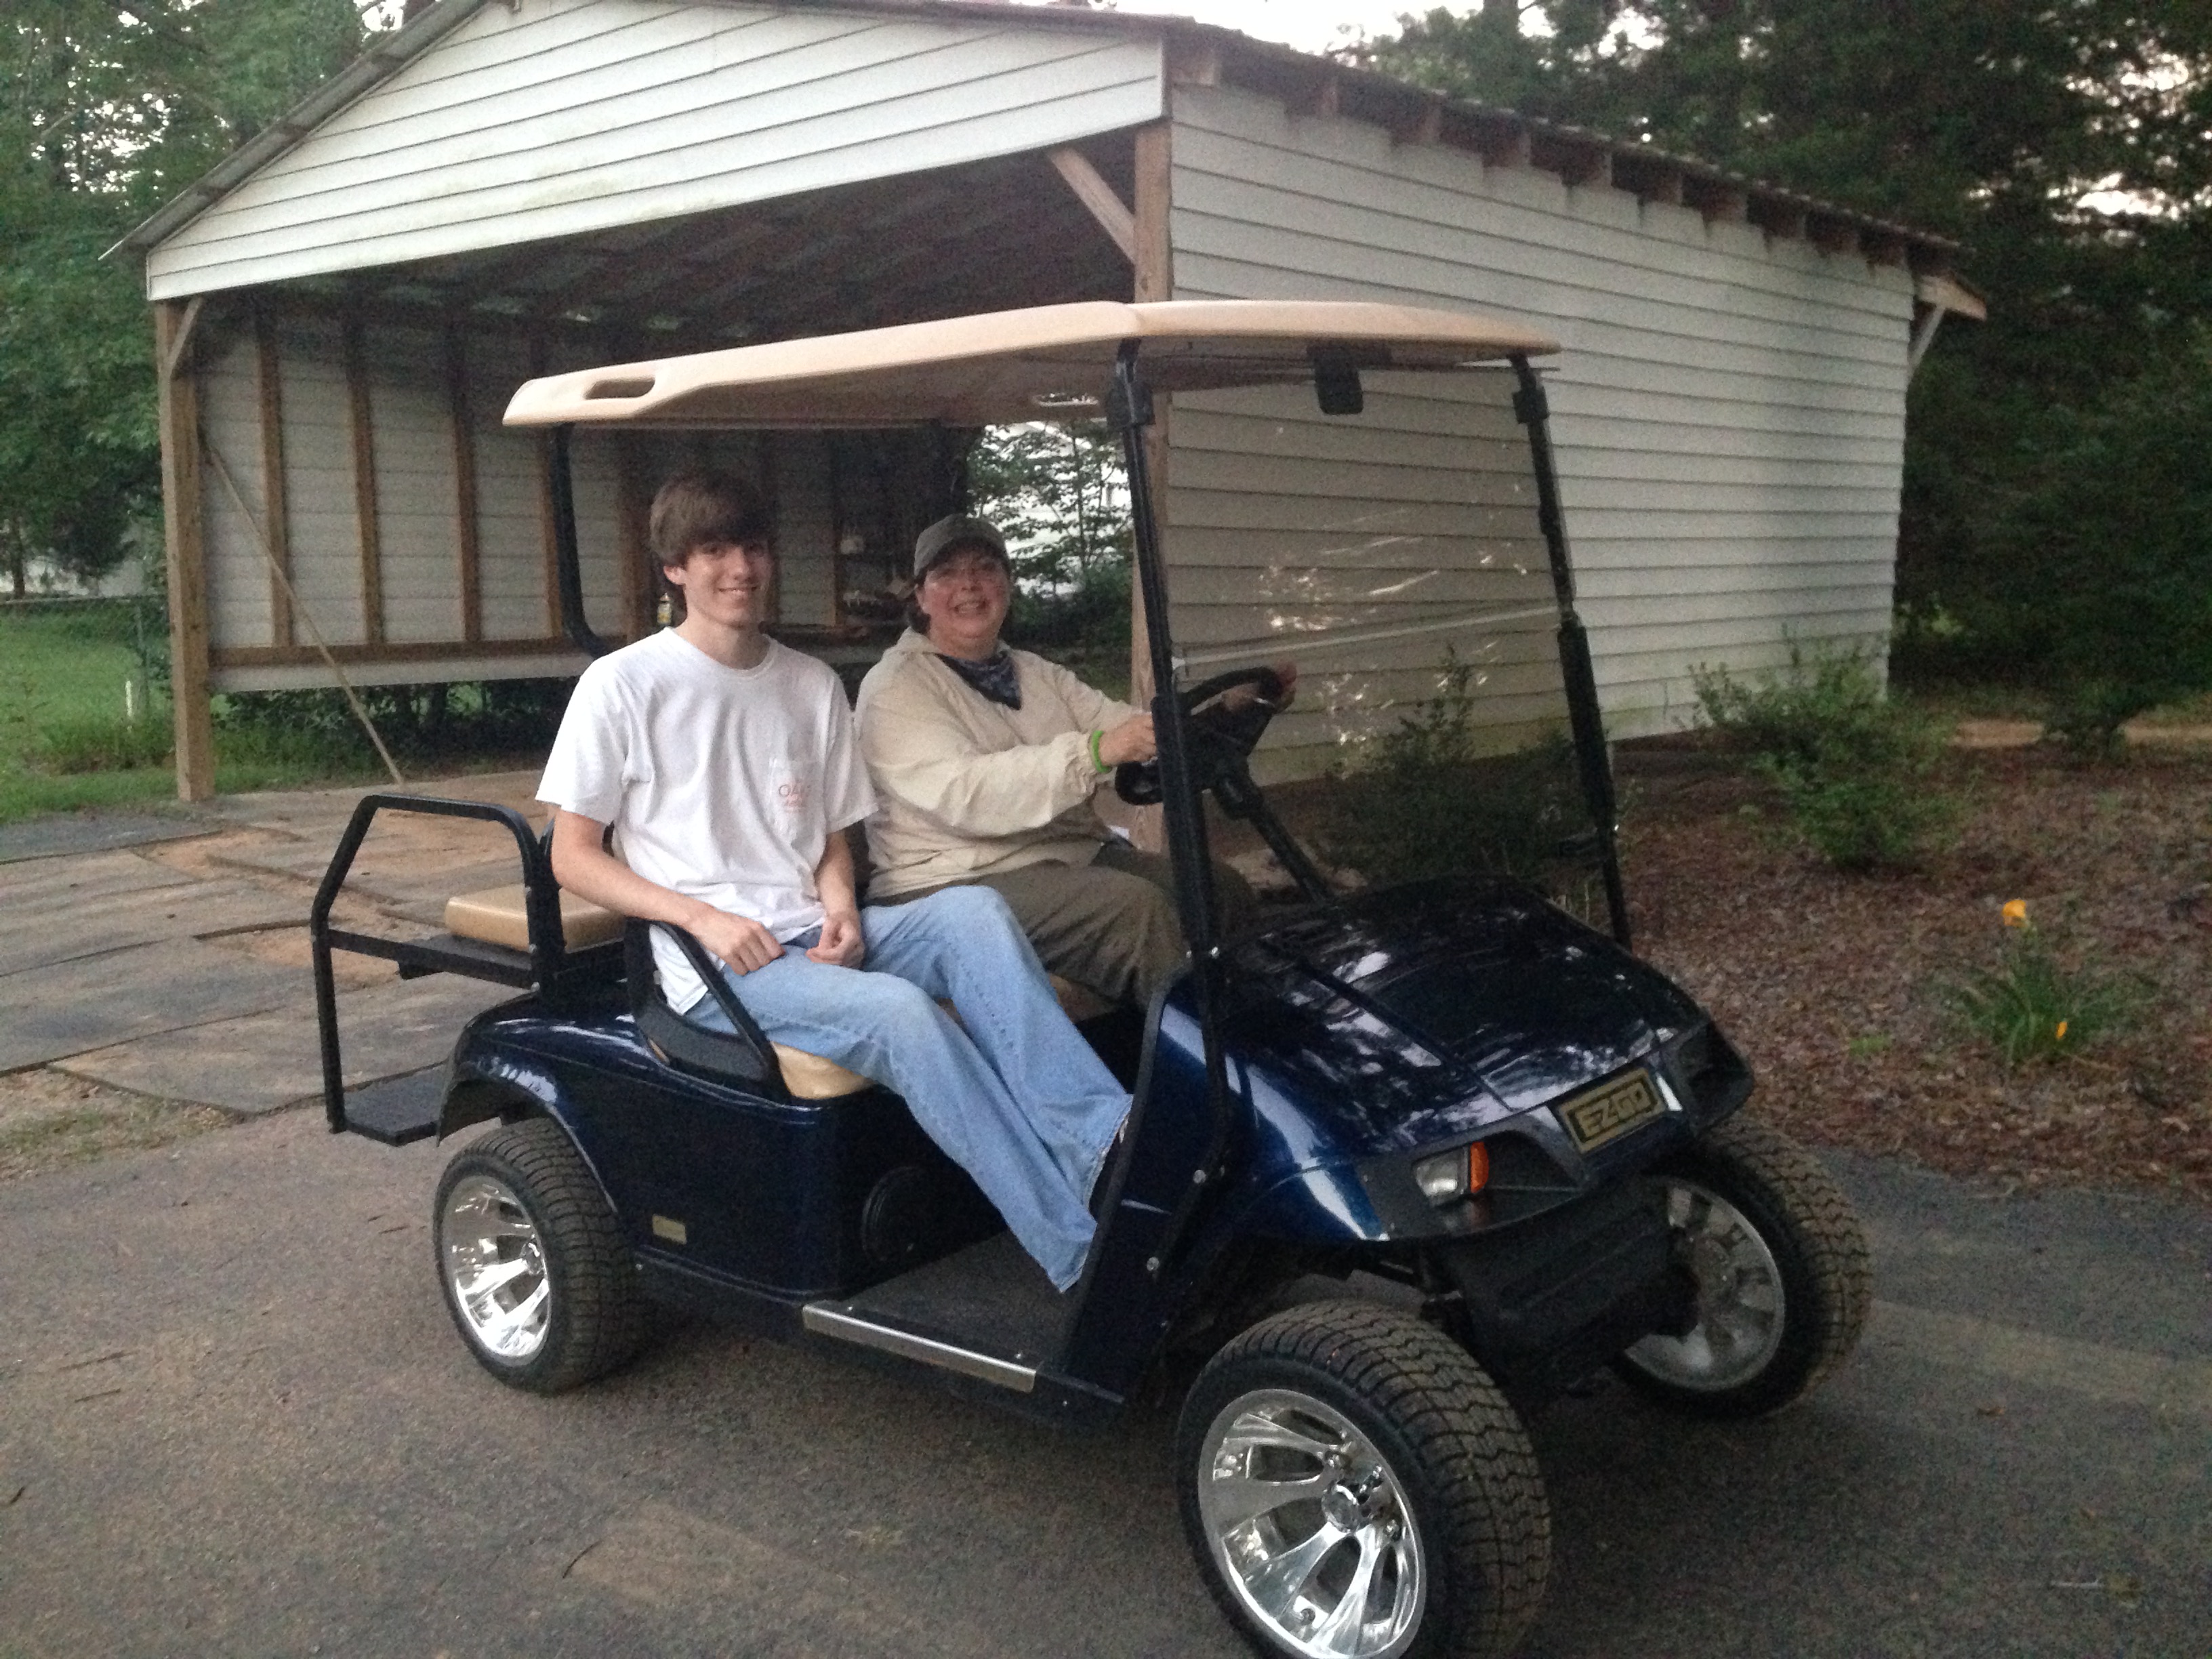 New Golf Cart for Blueberry Farm